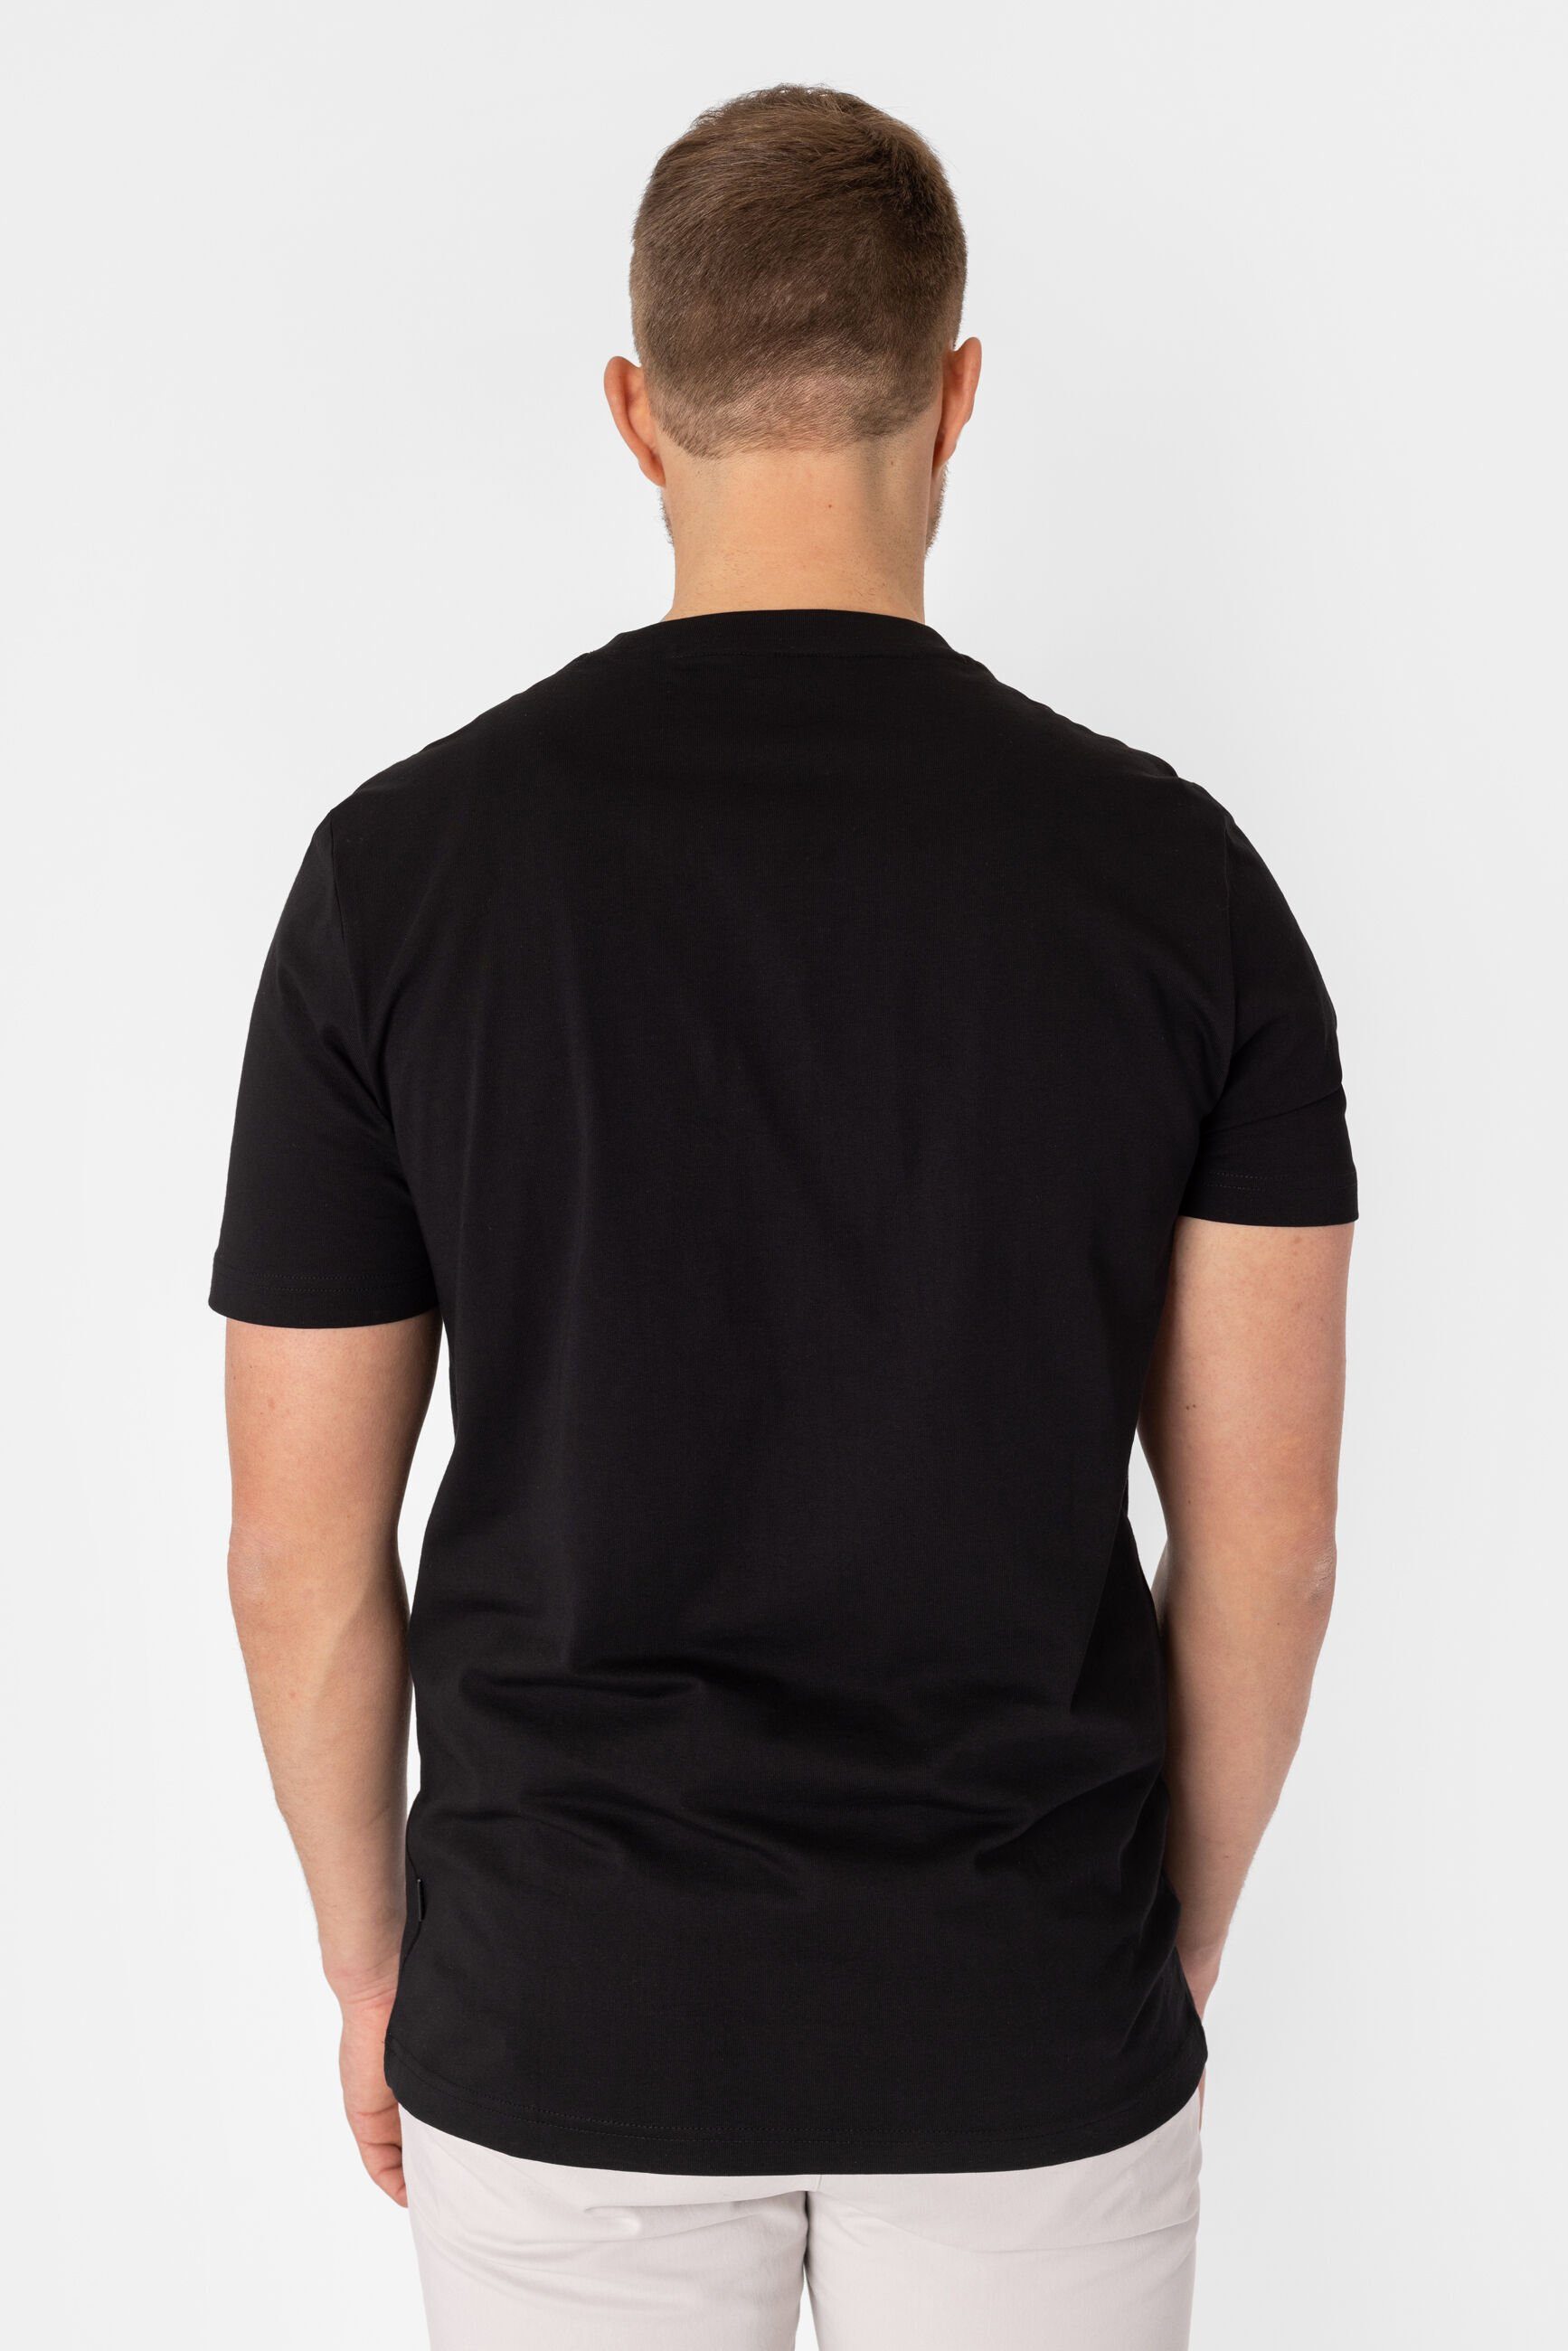 (001) BOSS Tiburt Schwarz T-Shirt